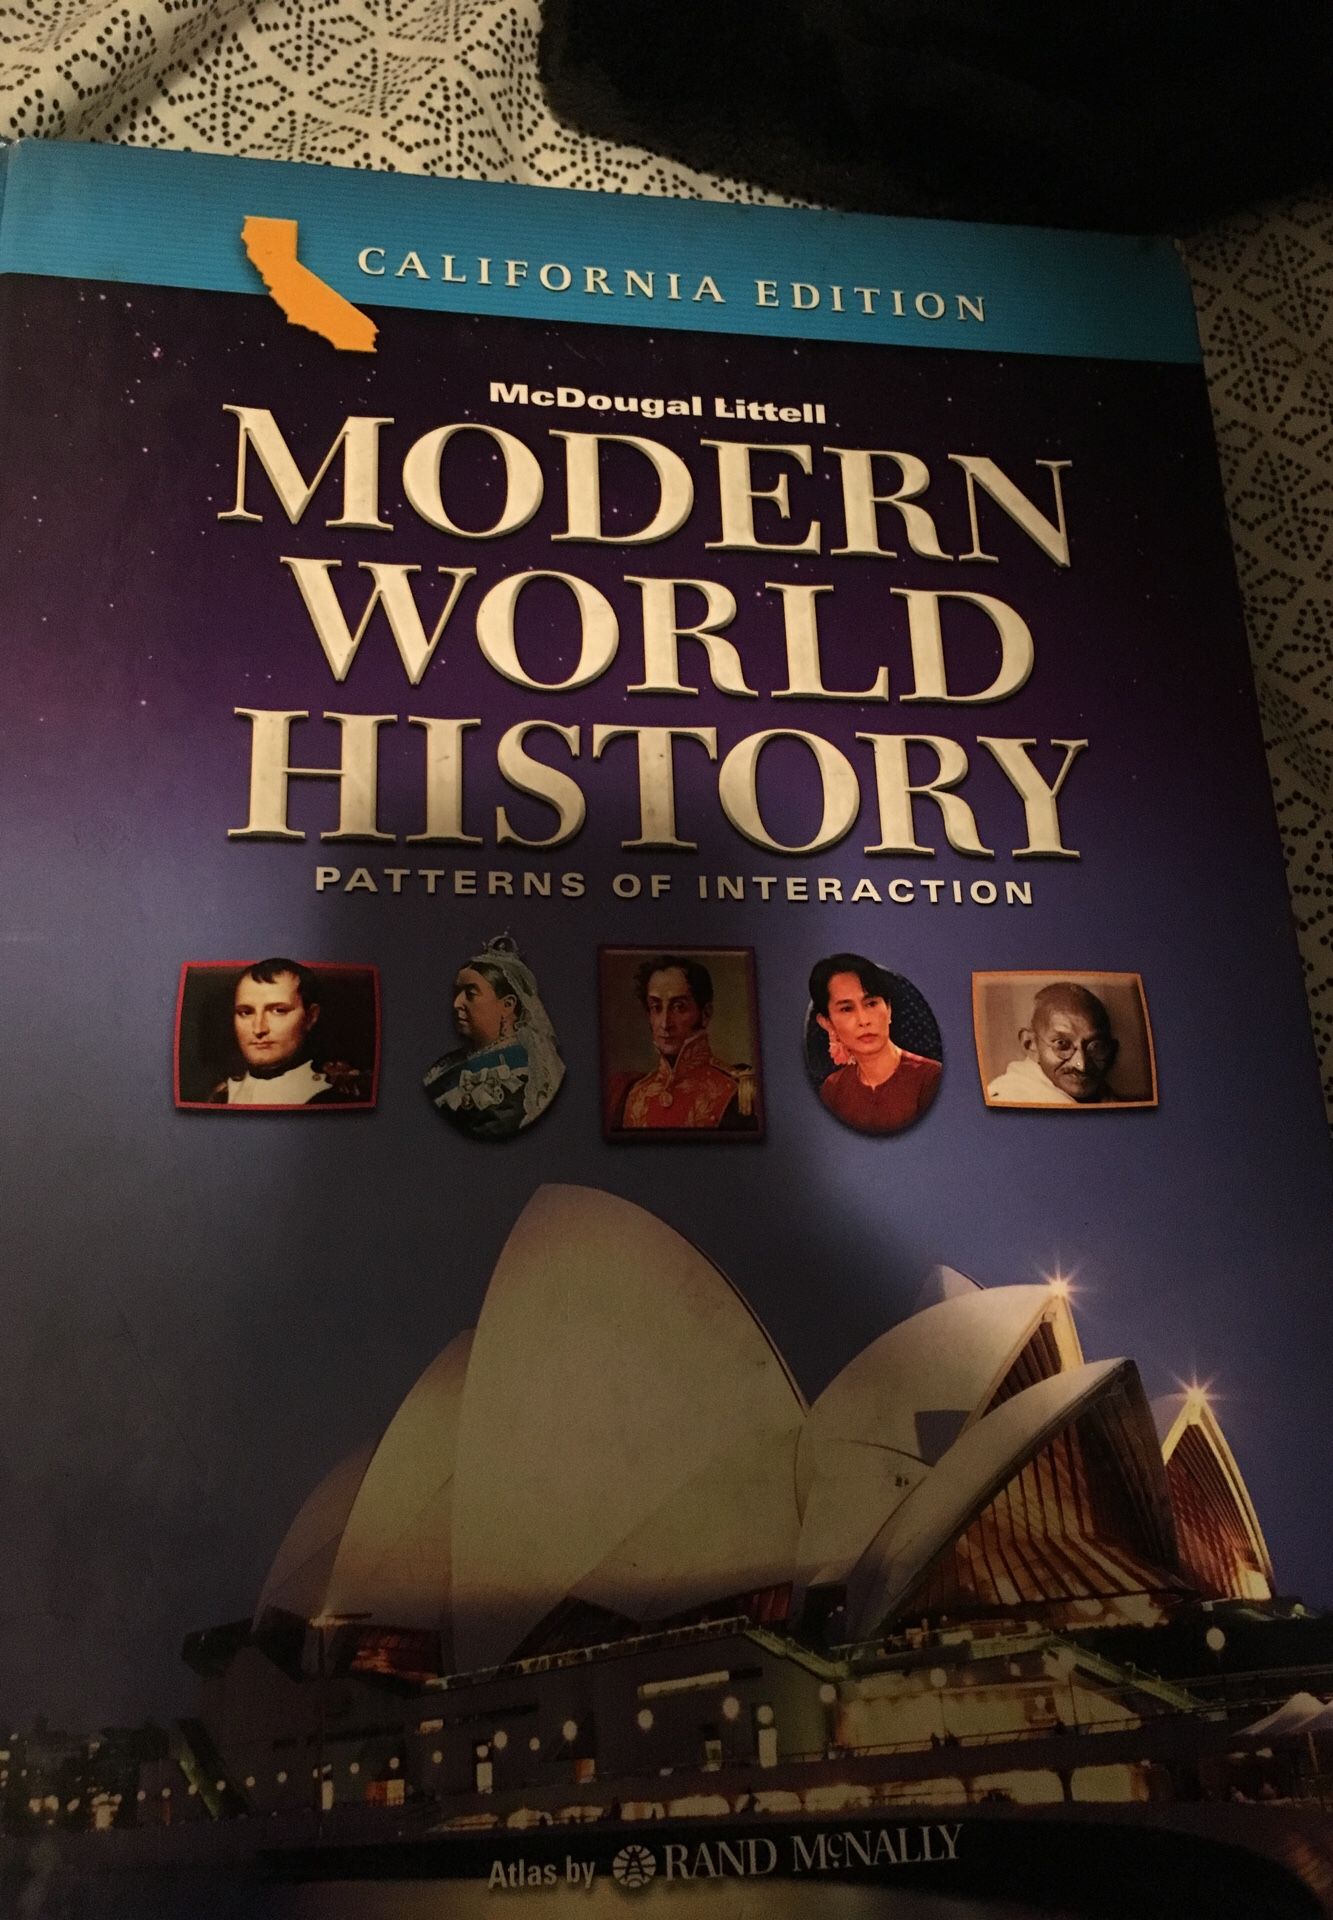 Modern World History textbook